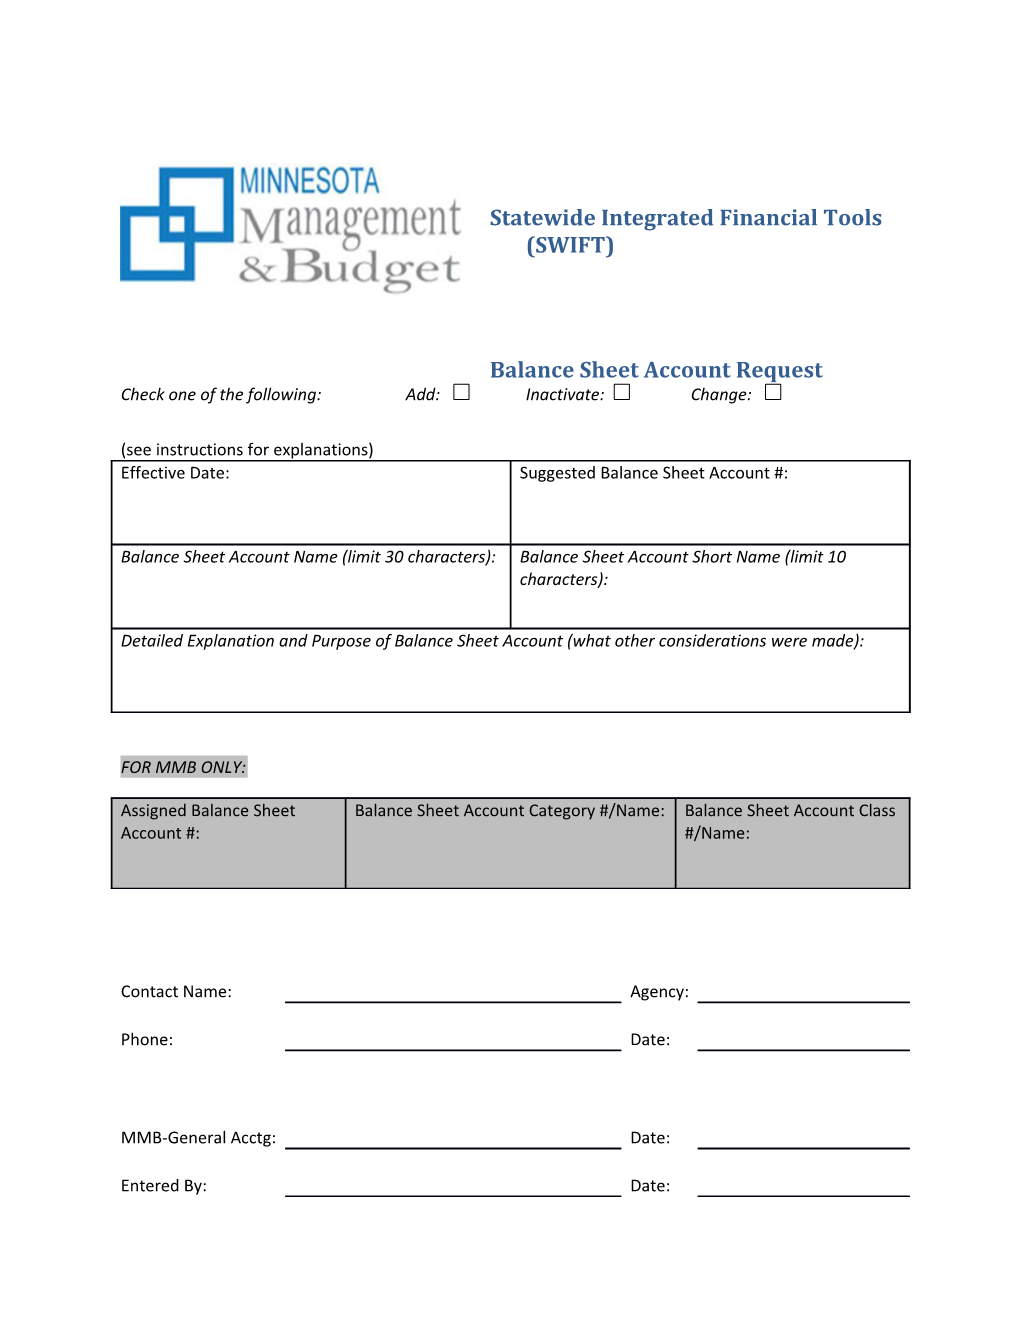 Balance Sheet Account Request Form